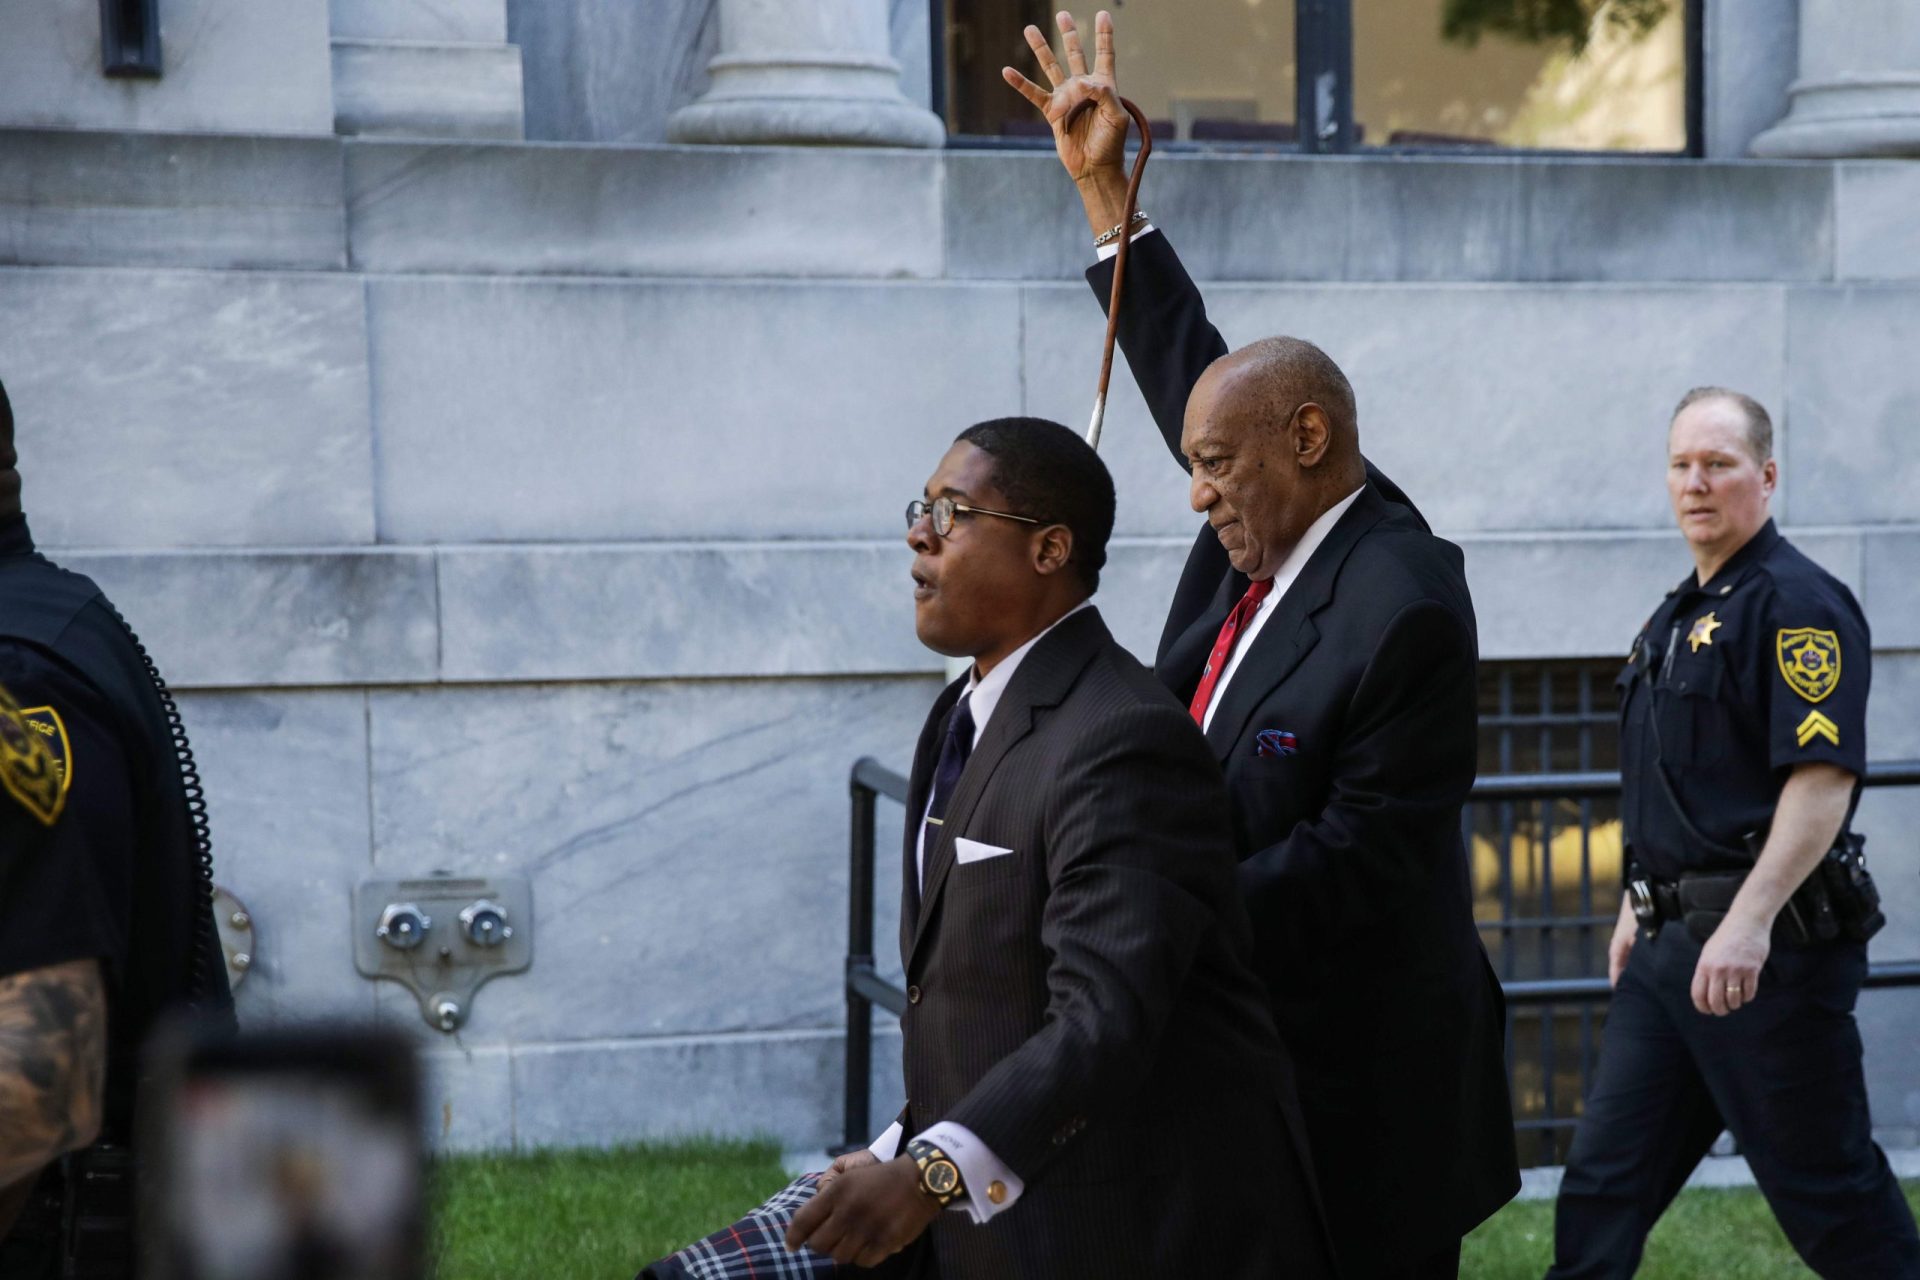 Cosby, a antiga bússola moral americana, completa a queda